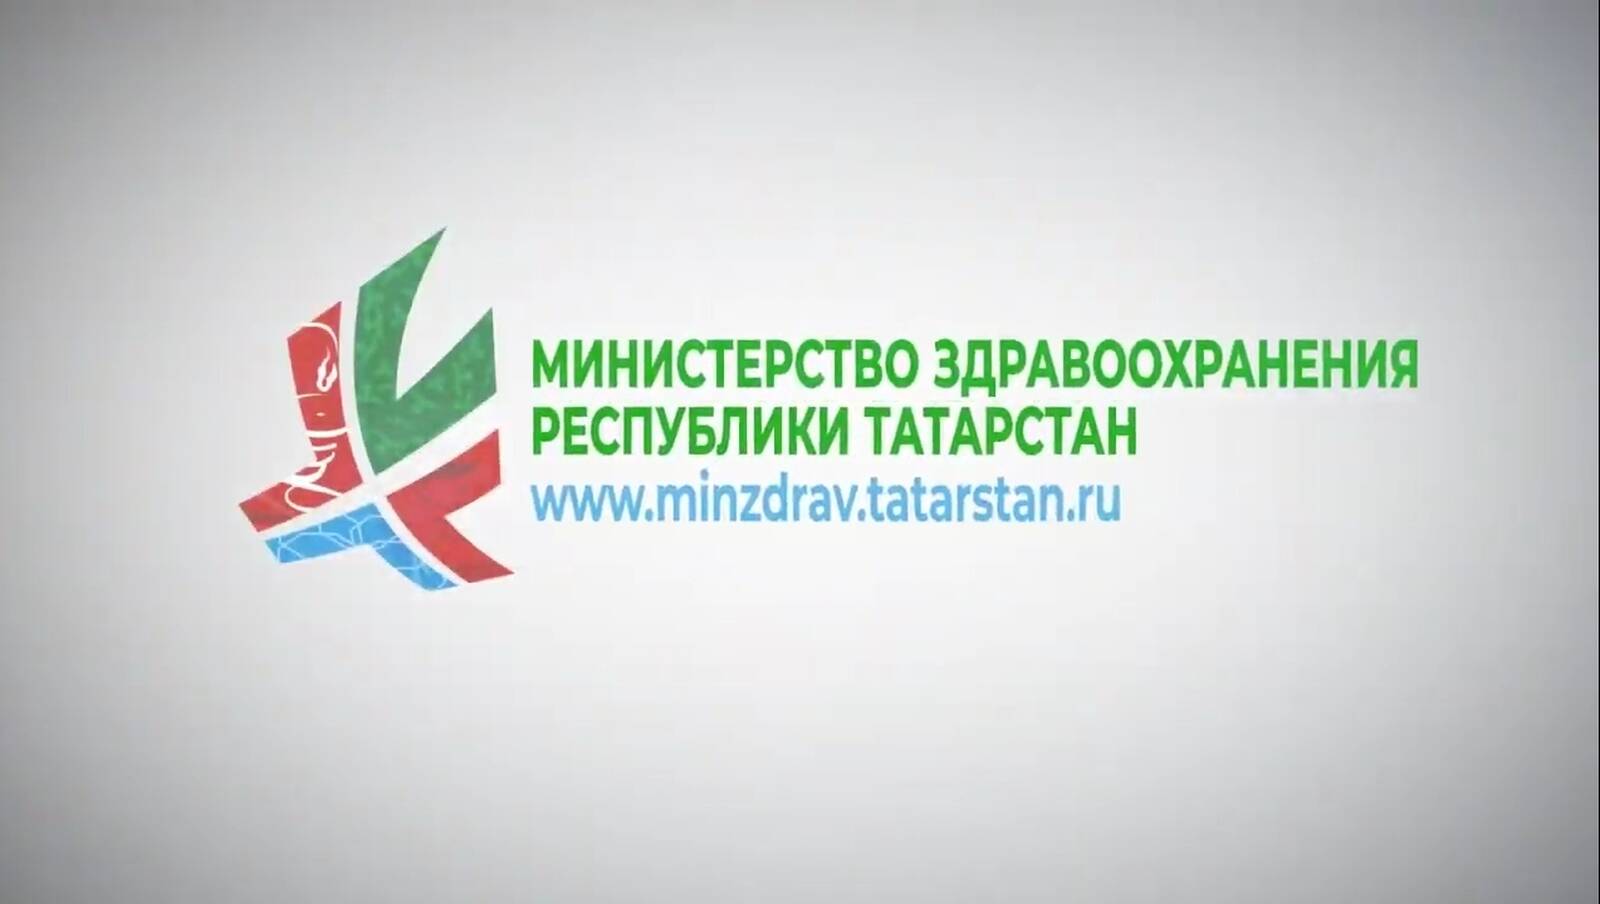 Сайт министерства здравоохранения рт. Эмблема Министерства здравоохранения РТ. Минздрав РТ. Минкульт РТ логотип. Логотип МЗ РТ на прозрачном фоне.